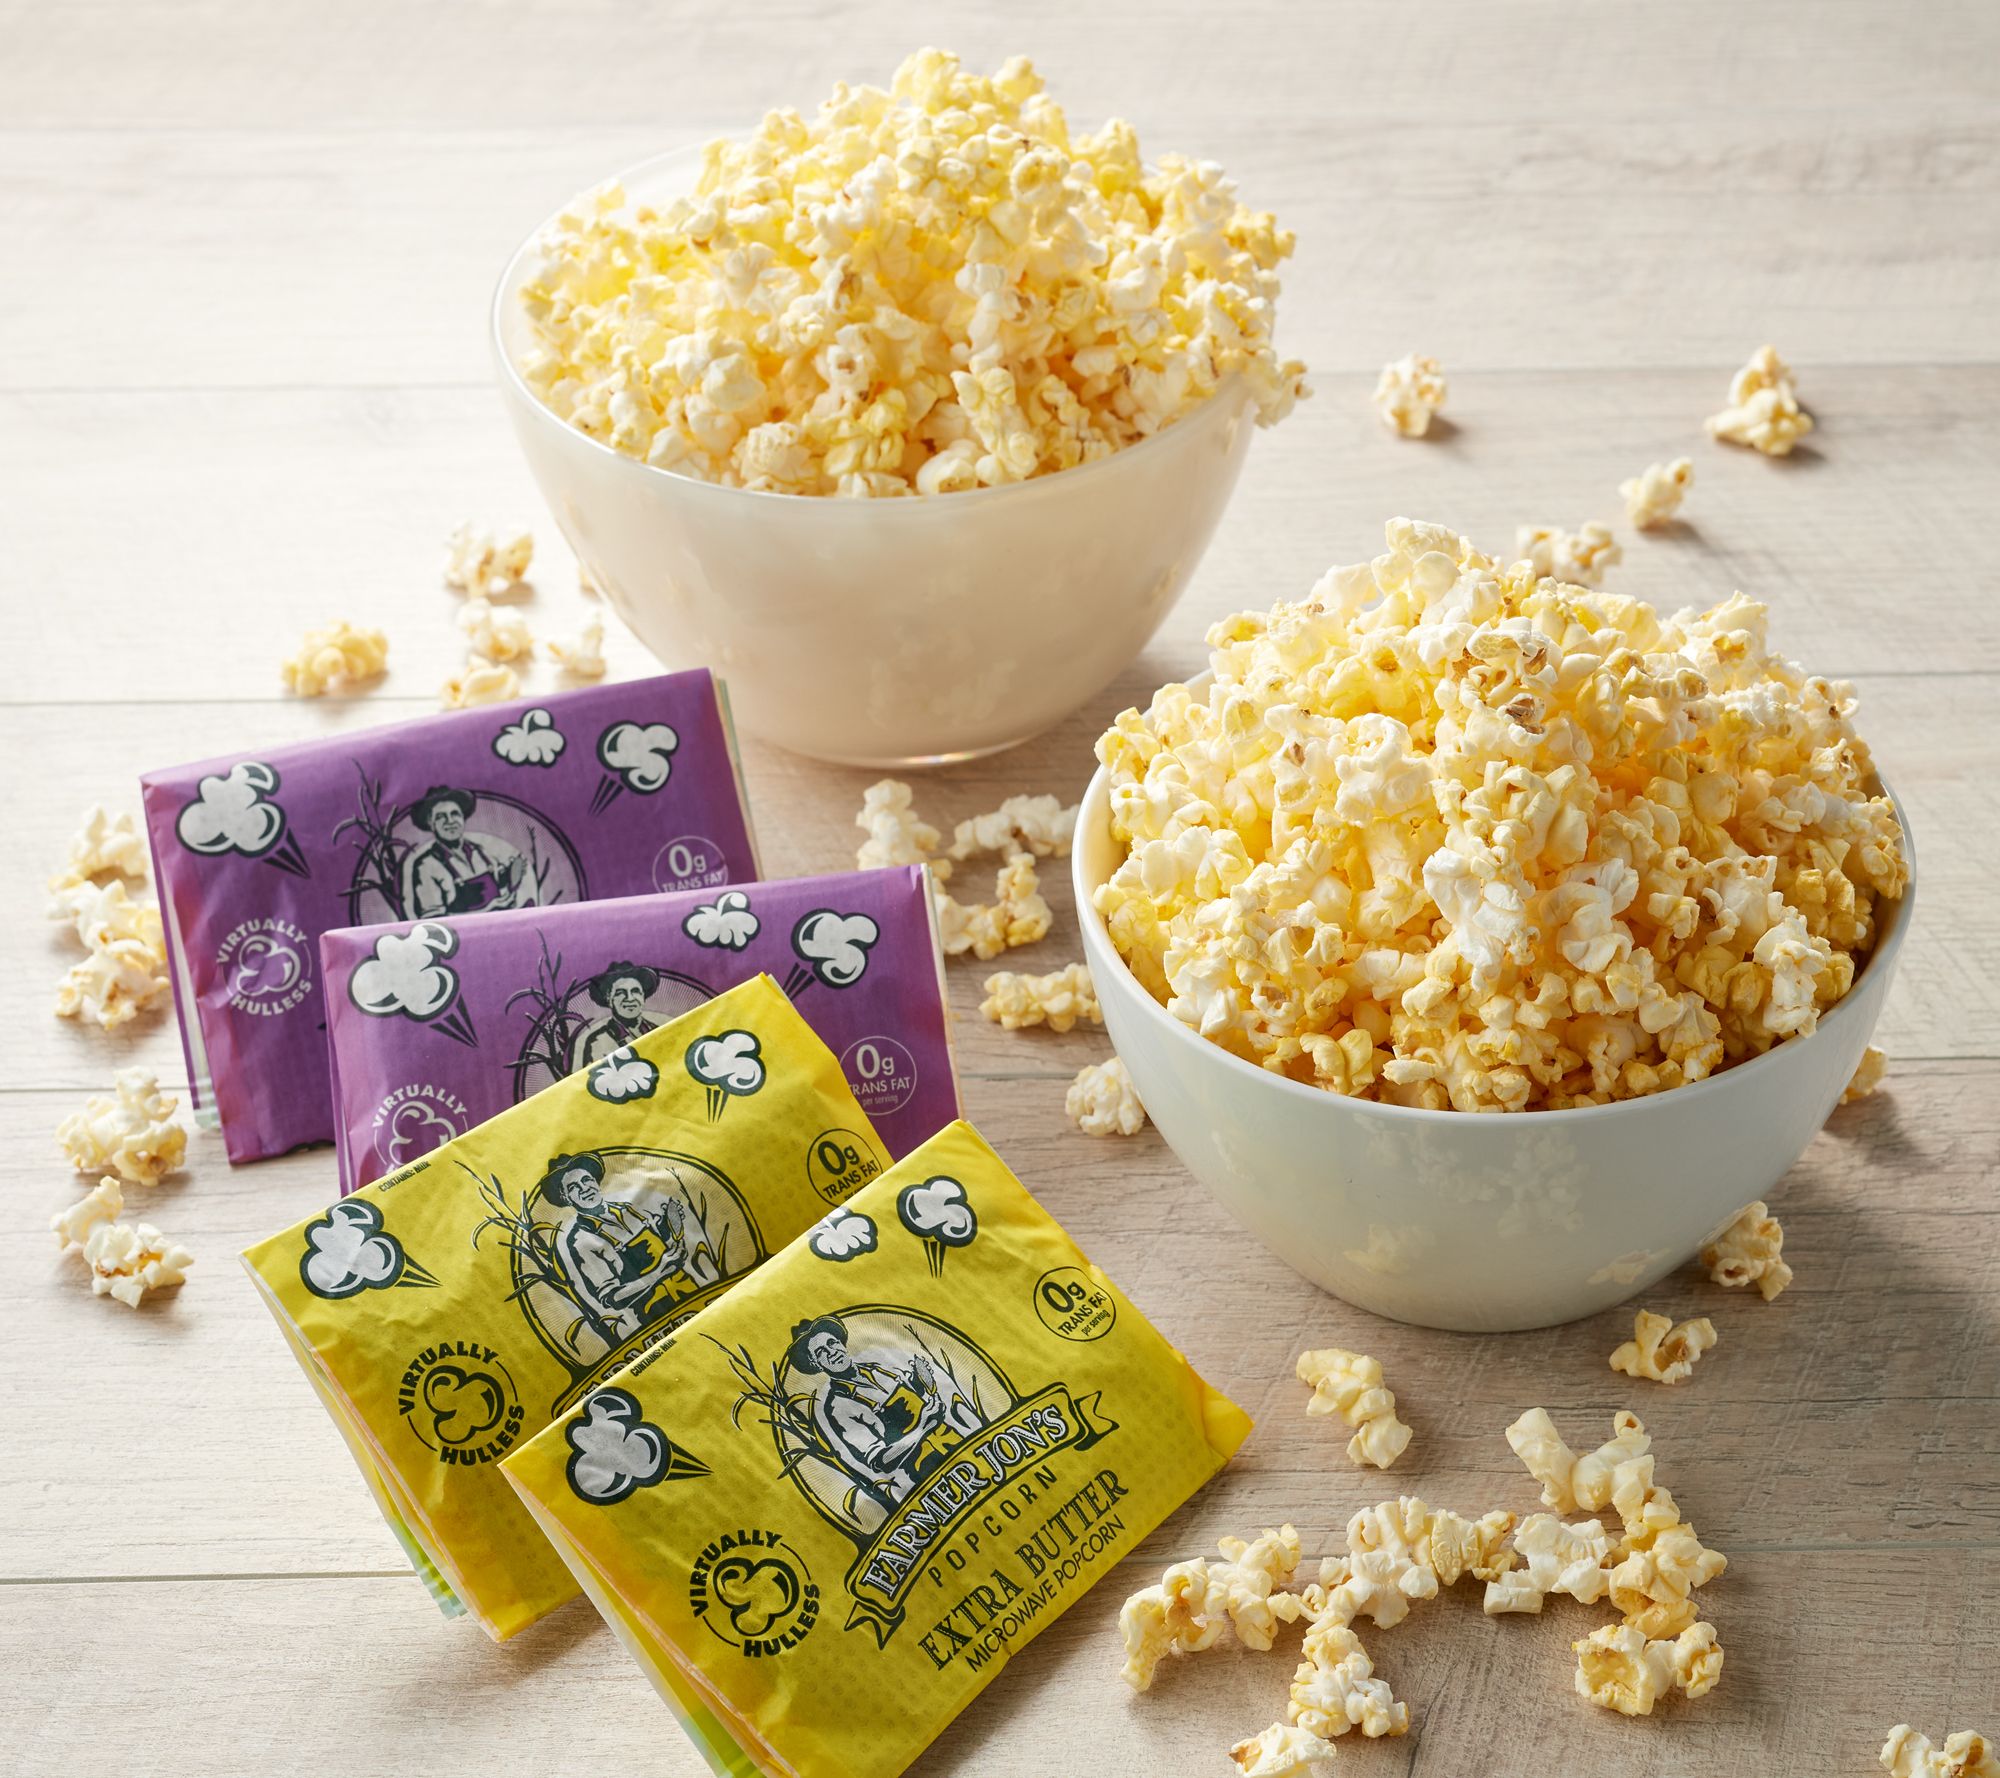 Great Northern Popcorn 12 Oz. Tabletop Popcorn Machine & Reviews